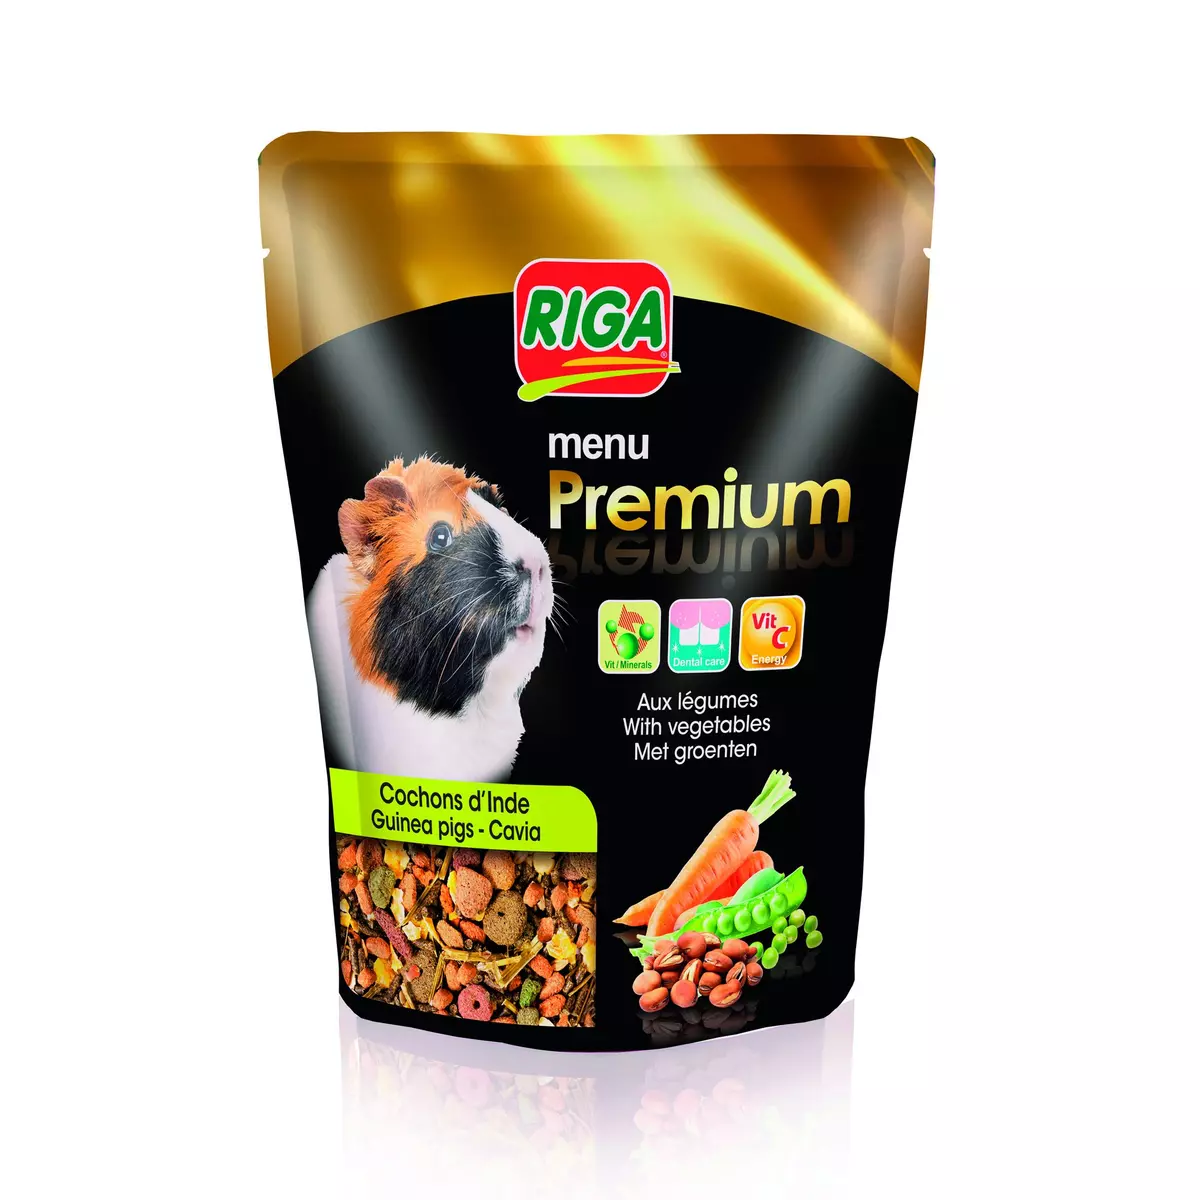 RIGA Premium menu pour cochons d'Inde 500g